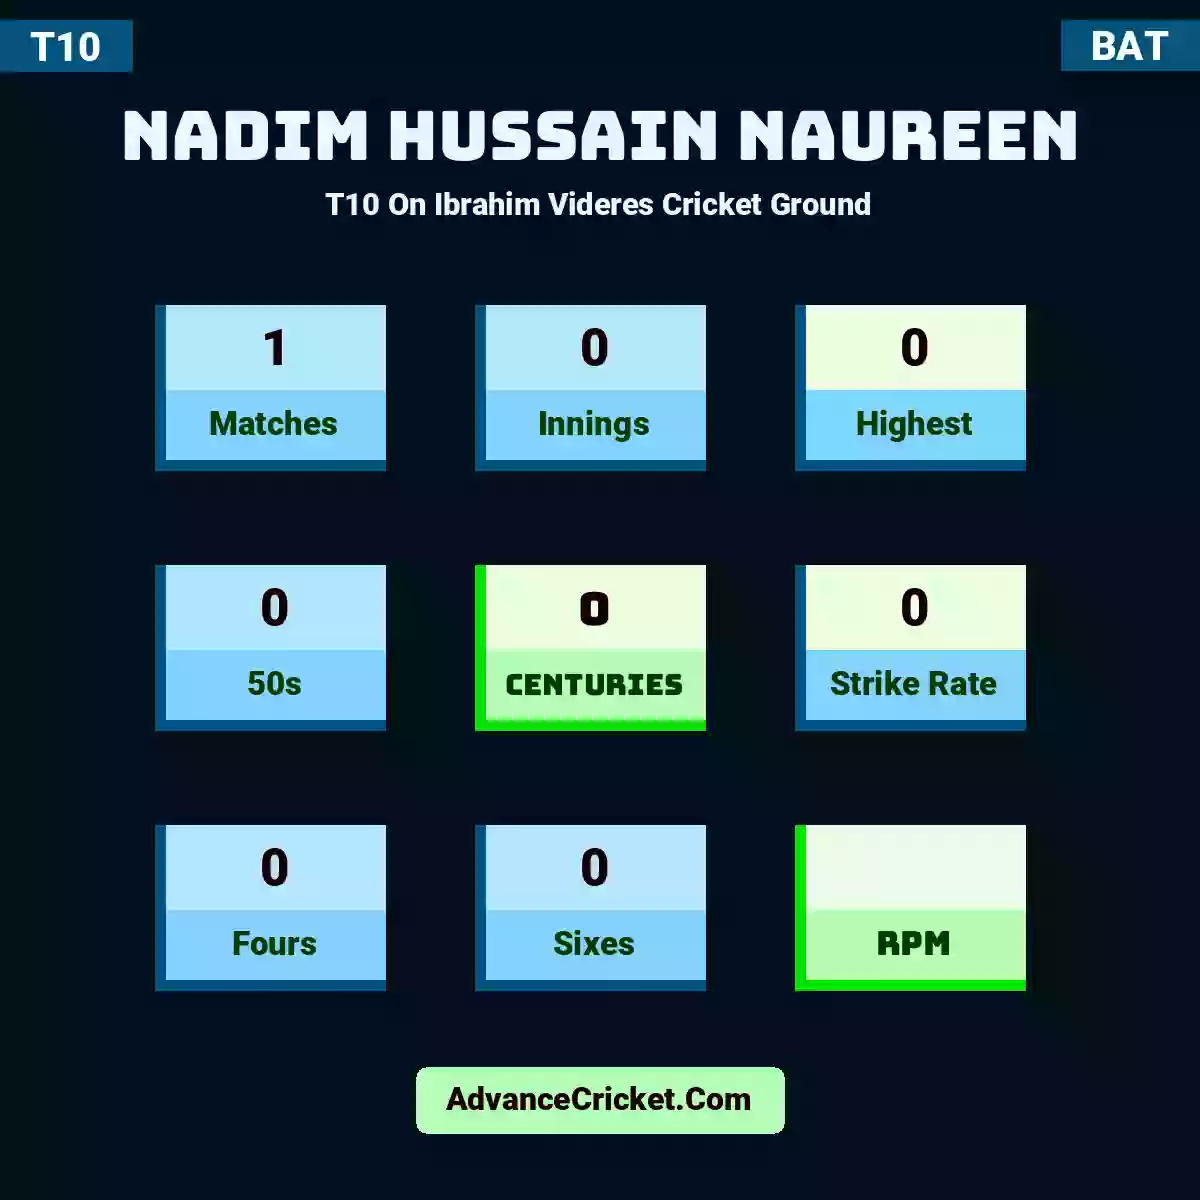 Nadim Hussain Naureen T10  On Ibrahim Videres Cricket Ground, Nadim Hussain Naureen played 1 matches, scored 0 runs as highest, 0 half-centuries, and 0 centuries, with a strike rate of 0. N.Naureen hit 0 fours and 0 sixes.